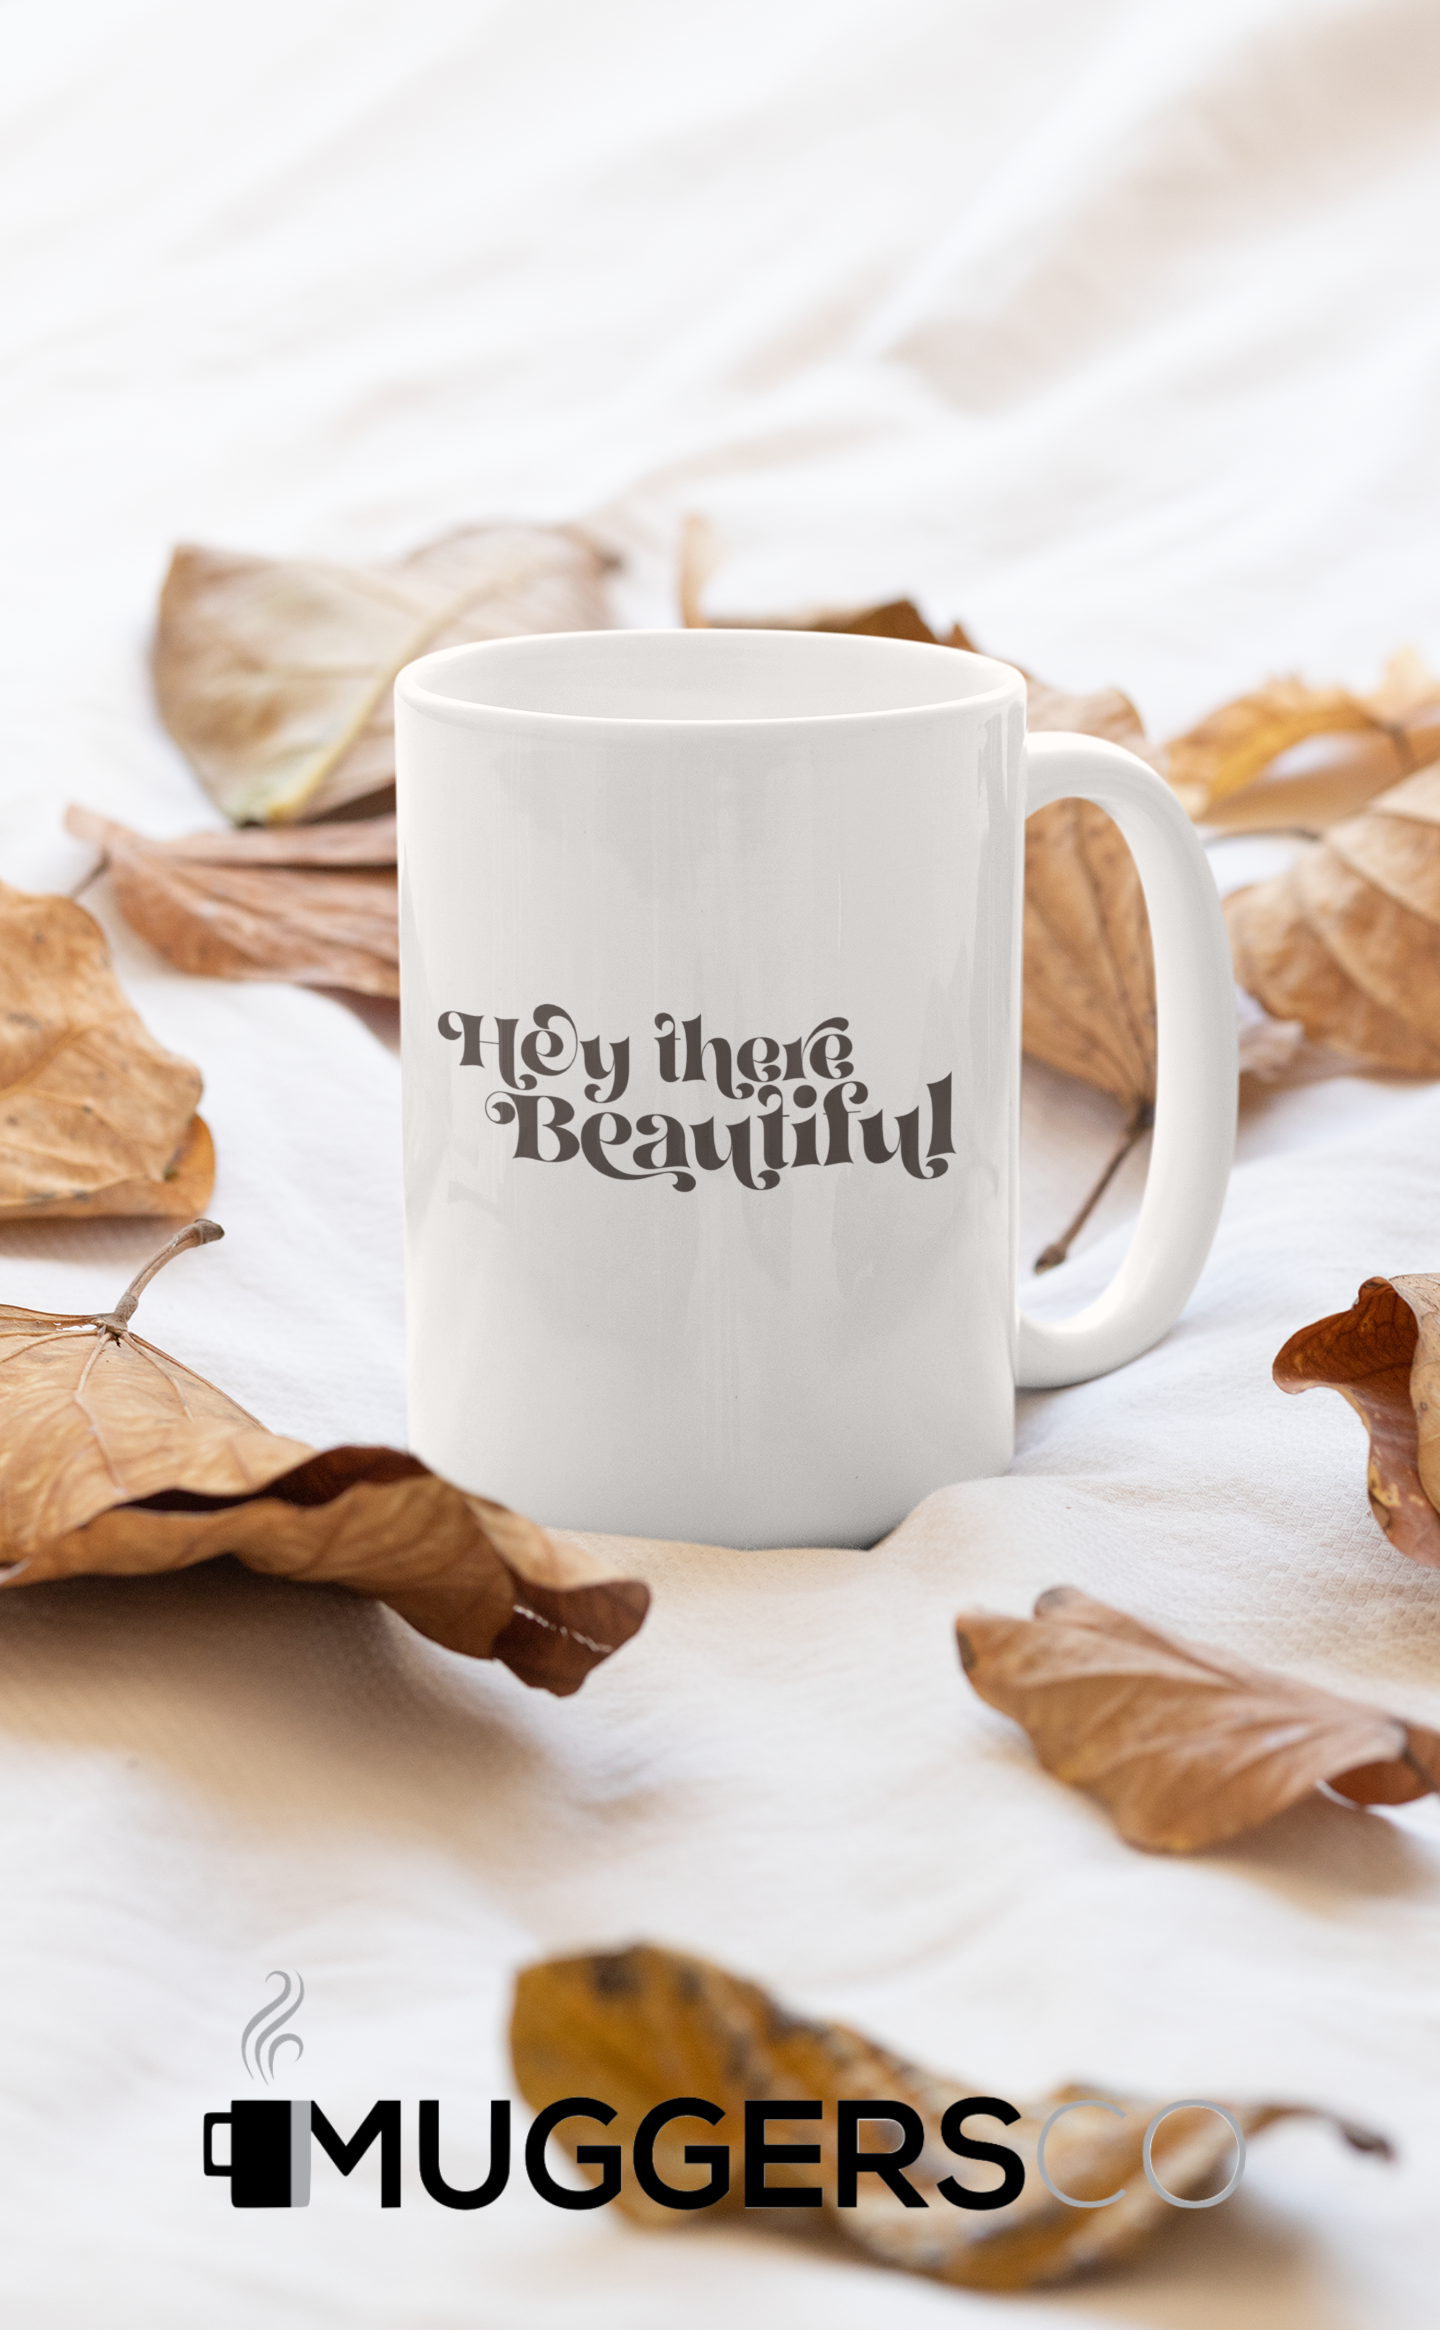 Hey there beautiful white coffee mug